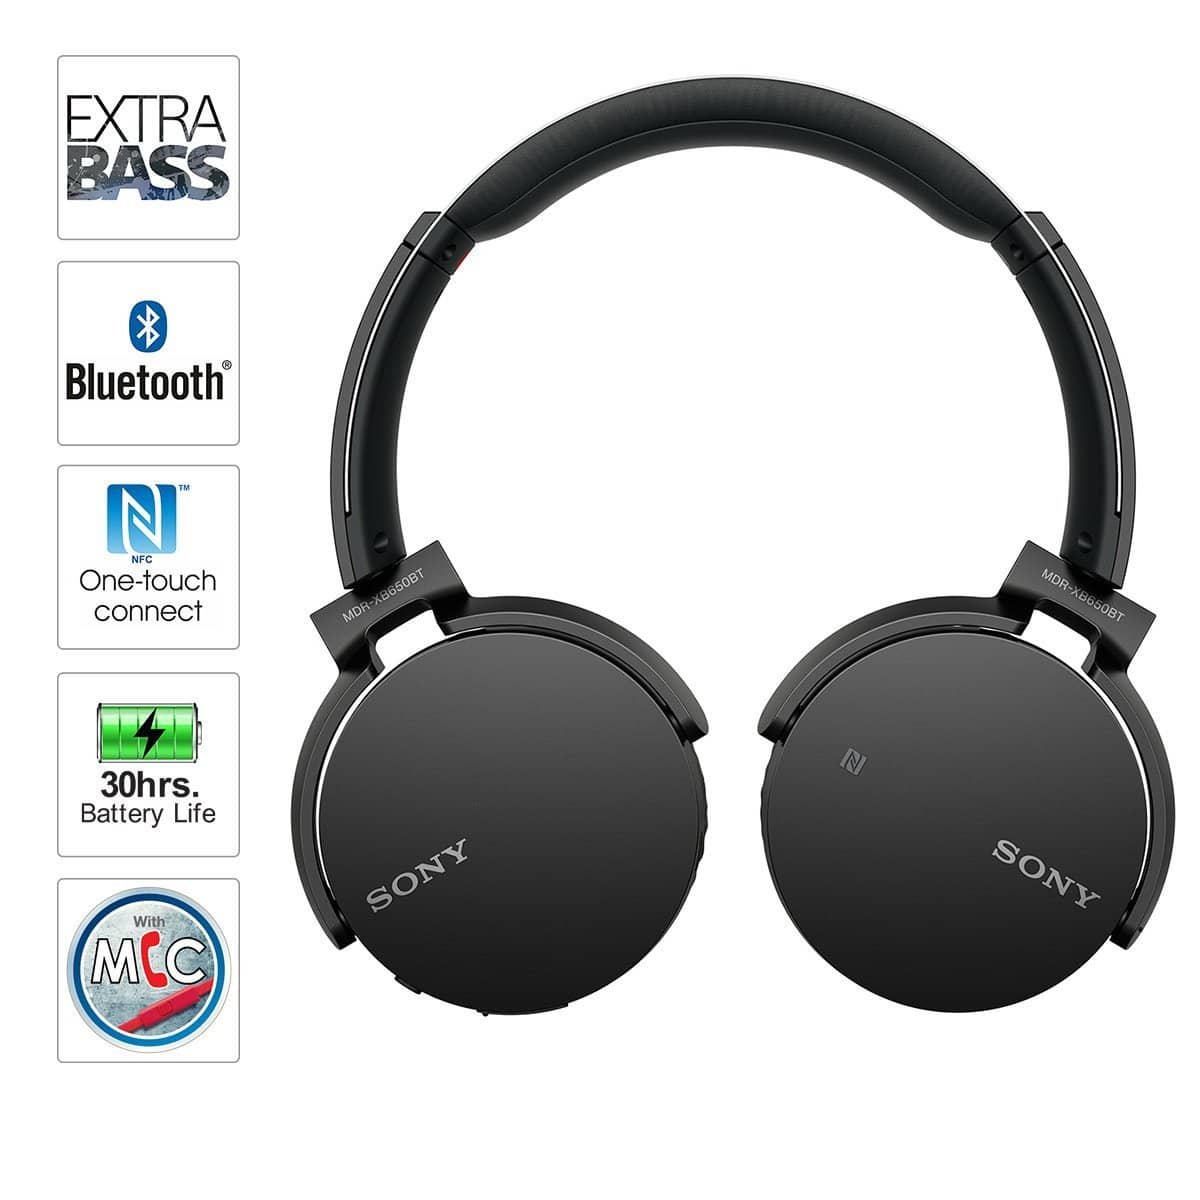 Sony MDRXB650BT/B Extra Bass Bluetooth Headphones - Black